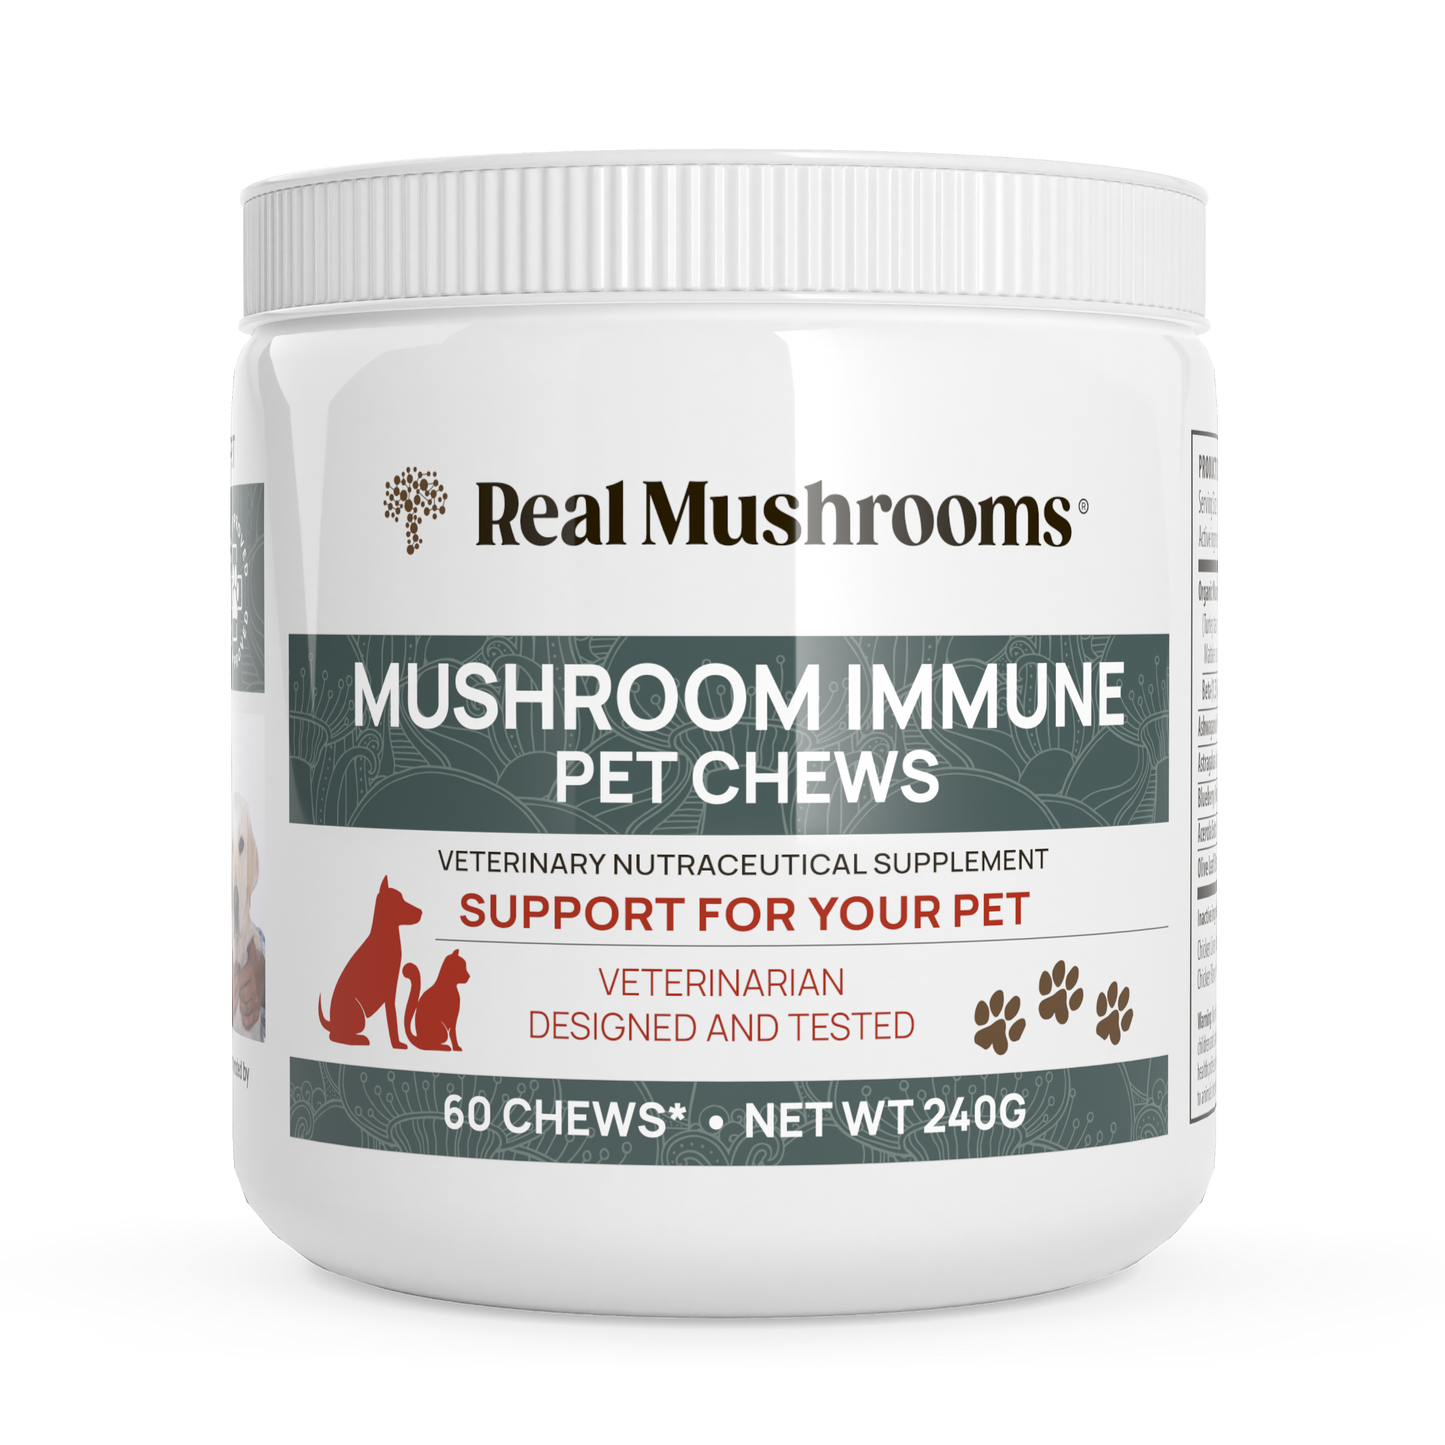 Mushroom Immune Pet Chews by Real Mushrooms